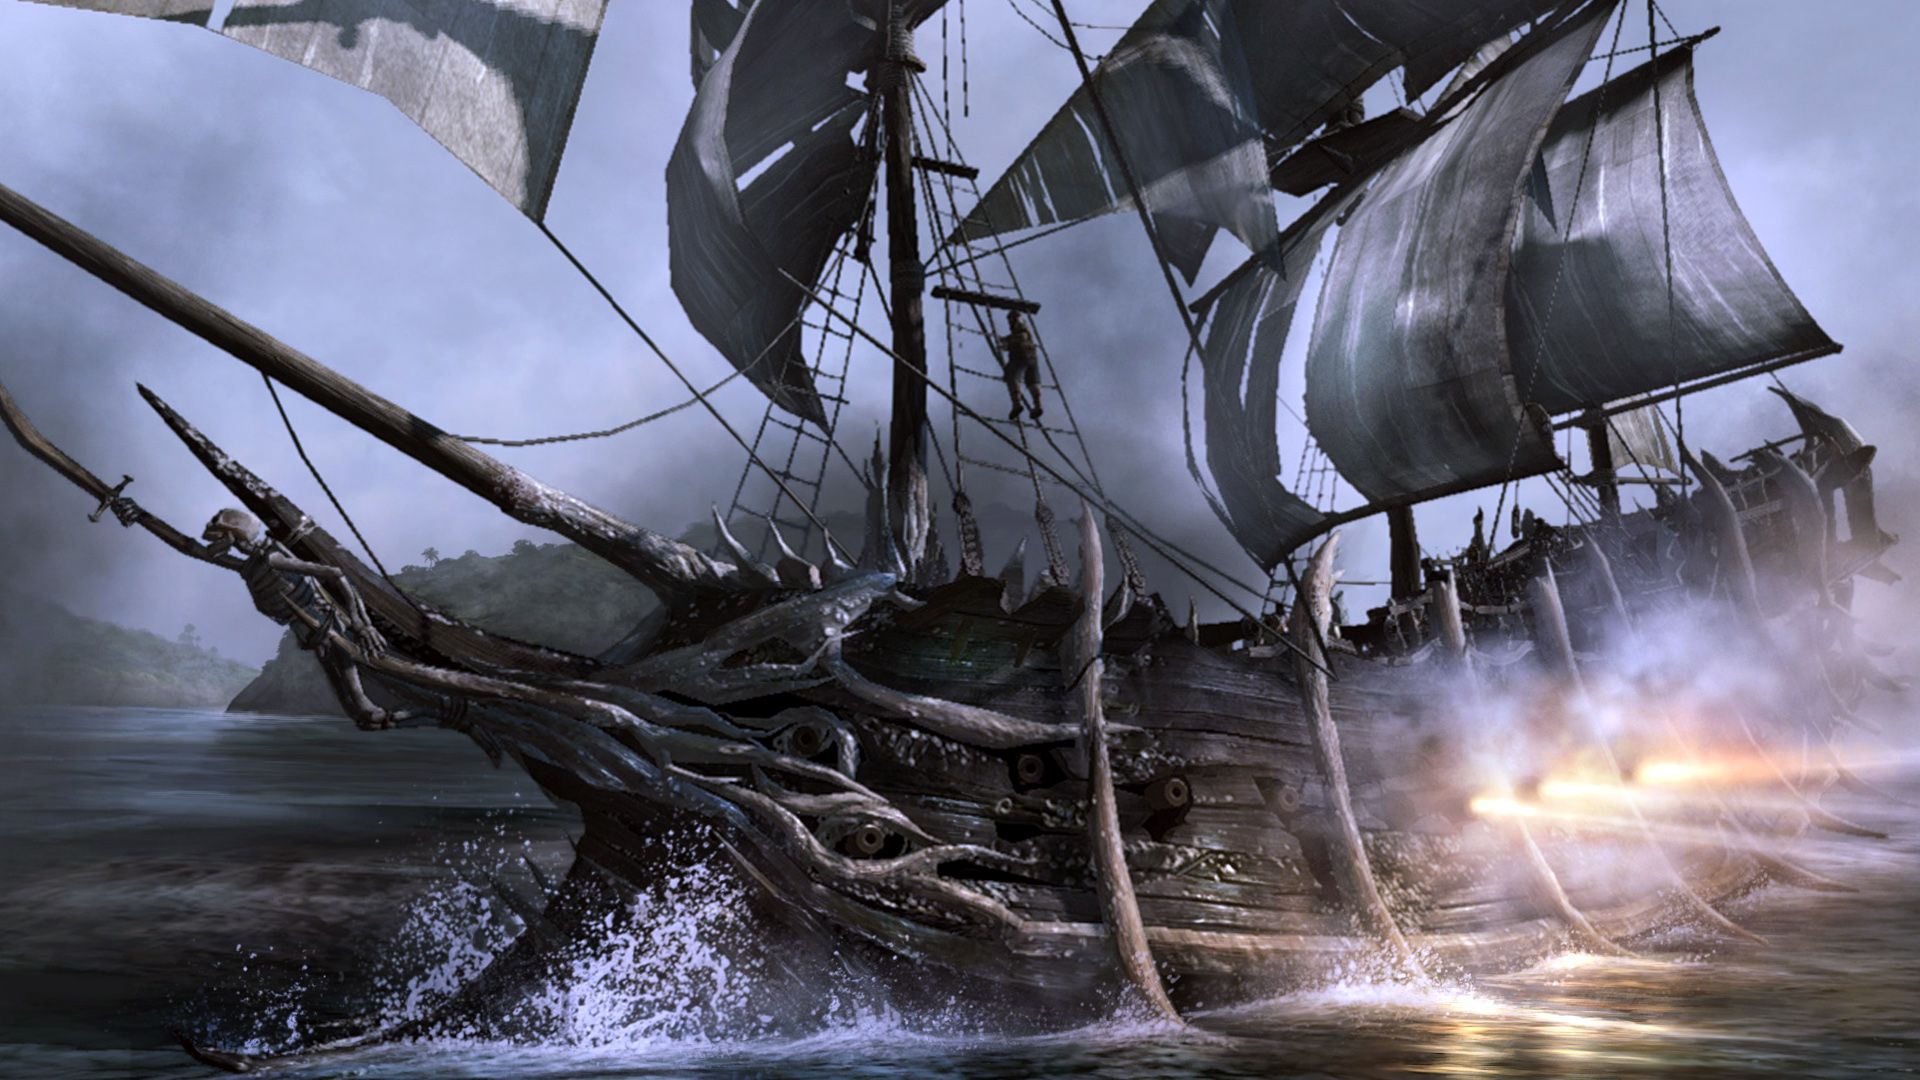 3D Pirate Ship Wallpaper